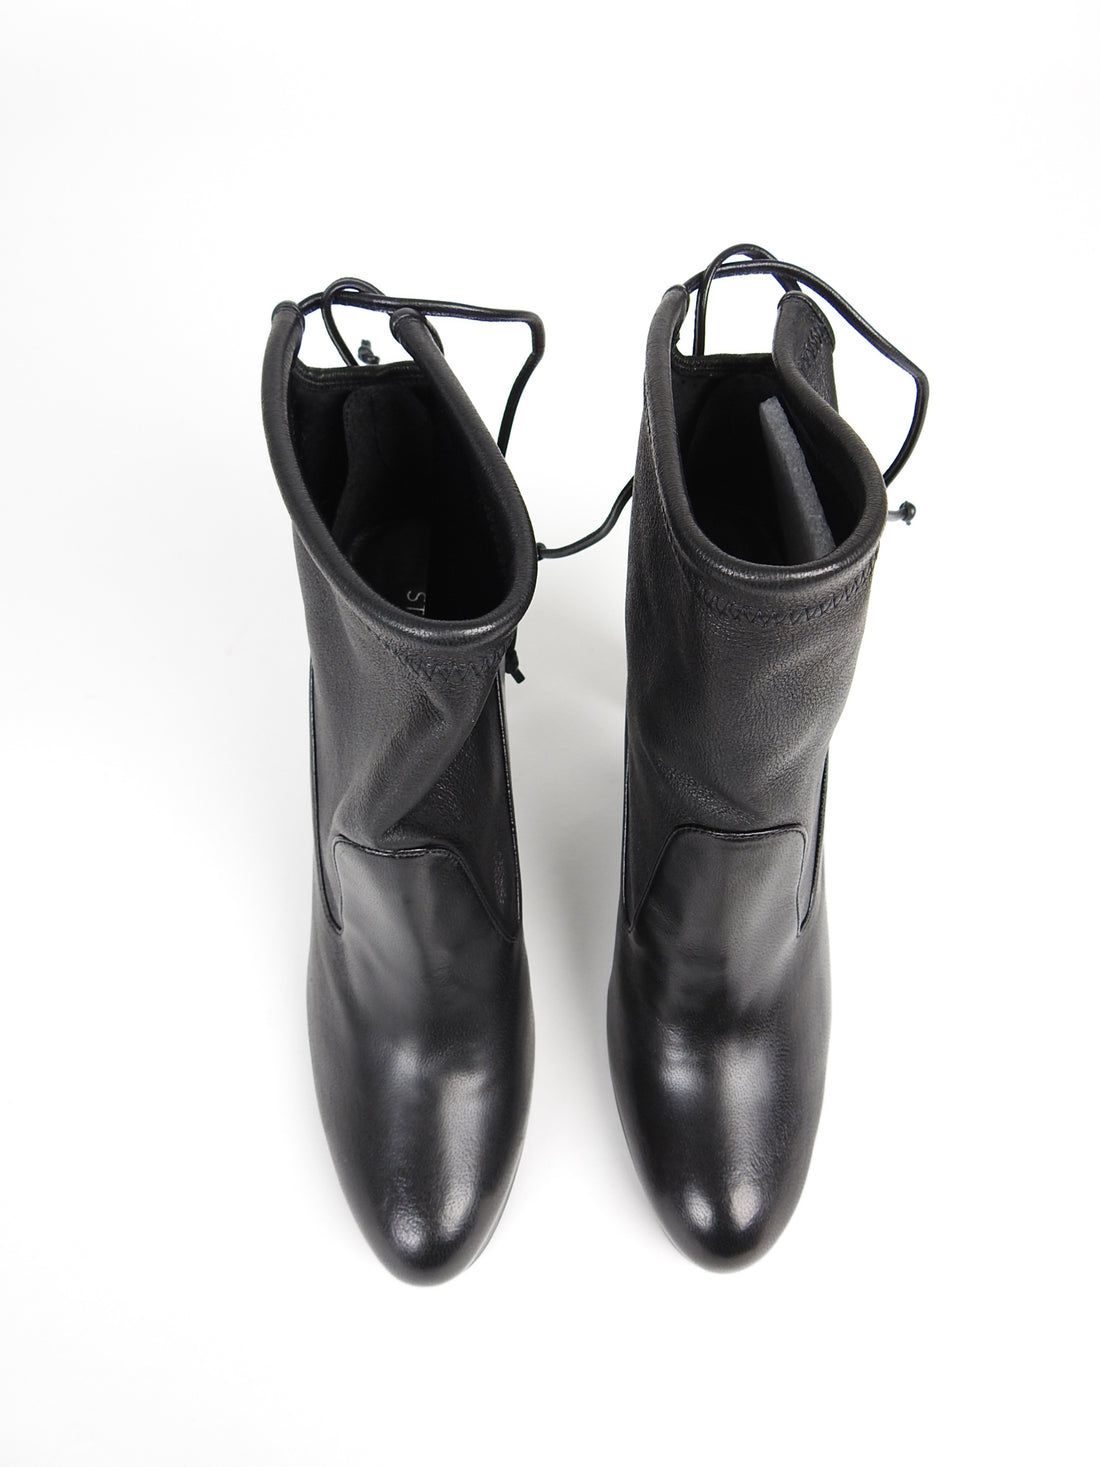 Stuart Weitzman Black Leather Mitten Ankle Boots - USA 8.5